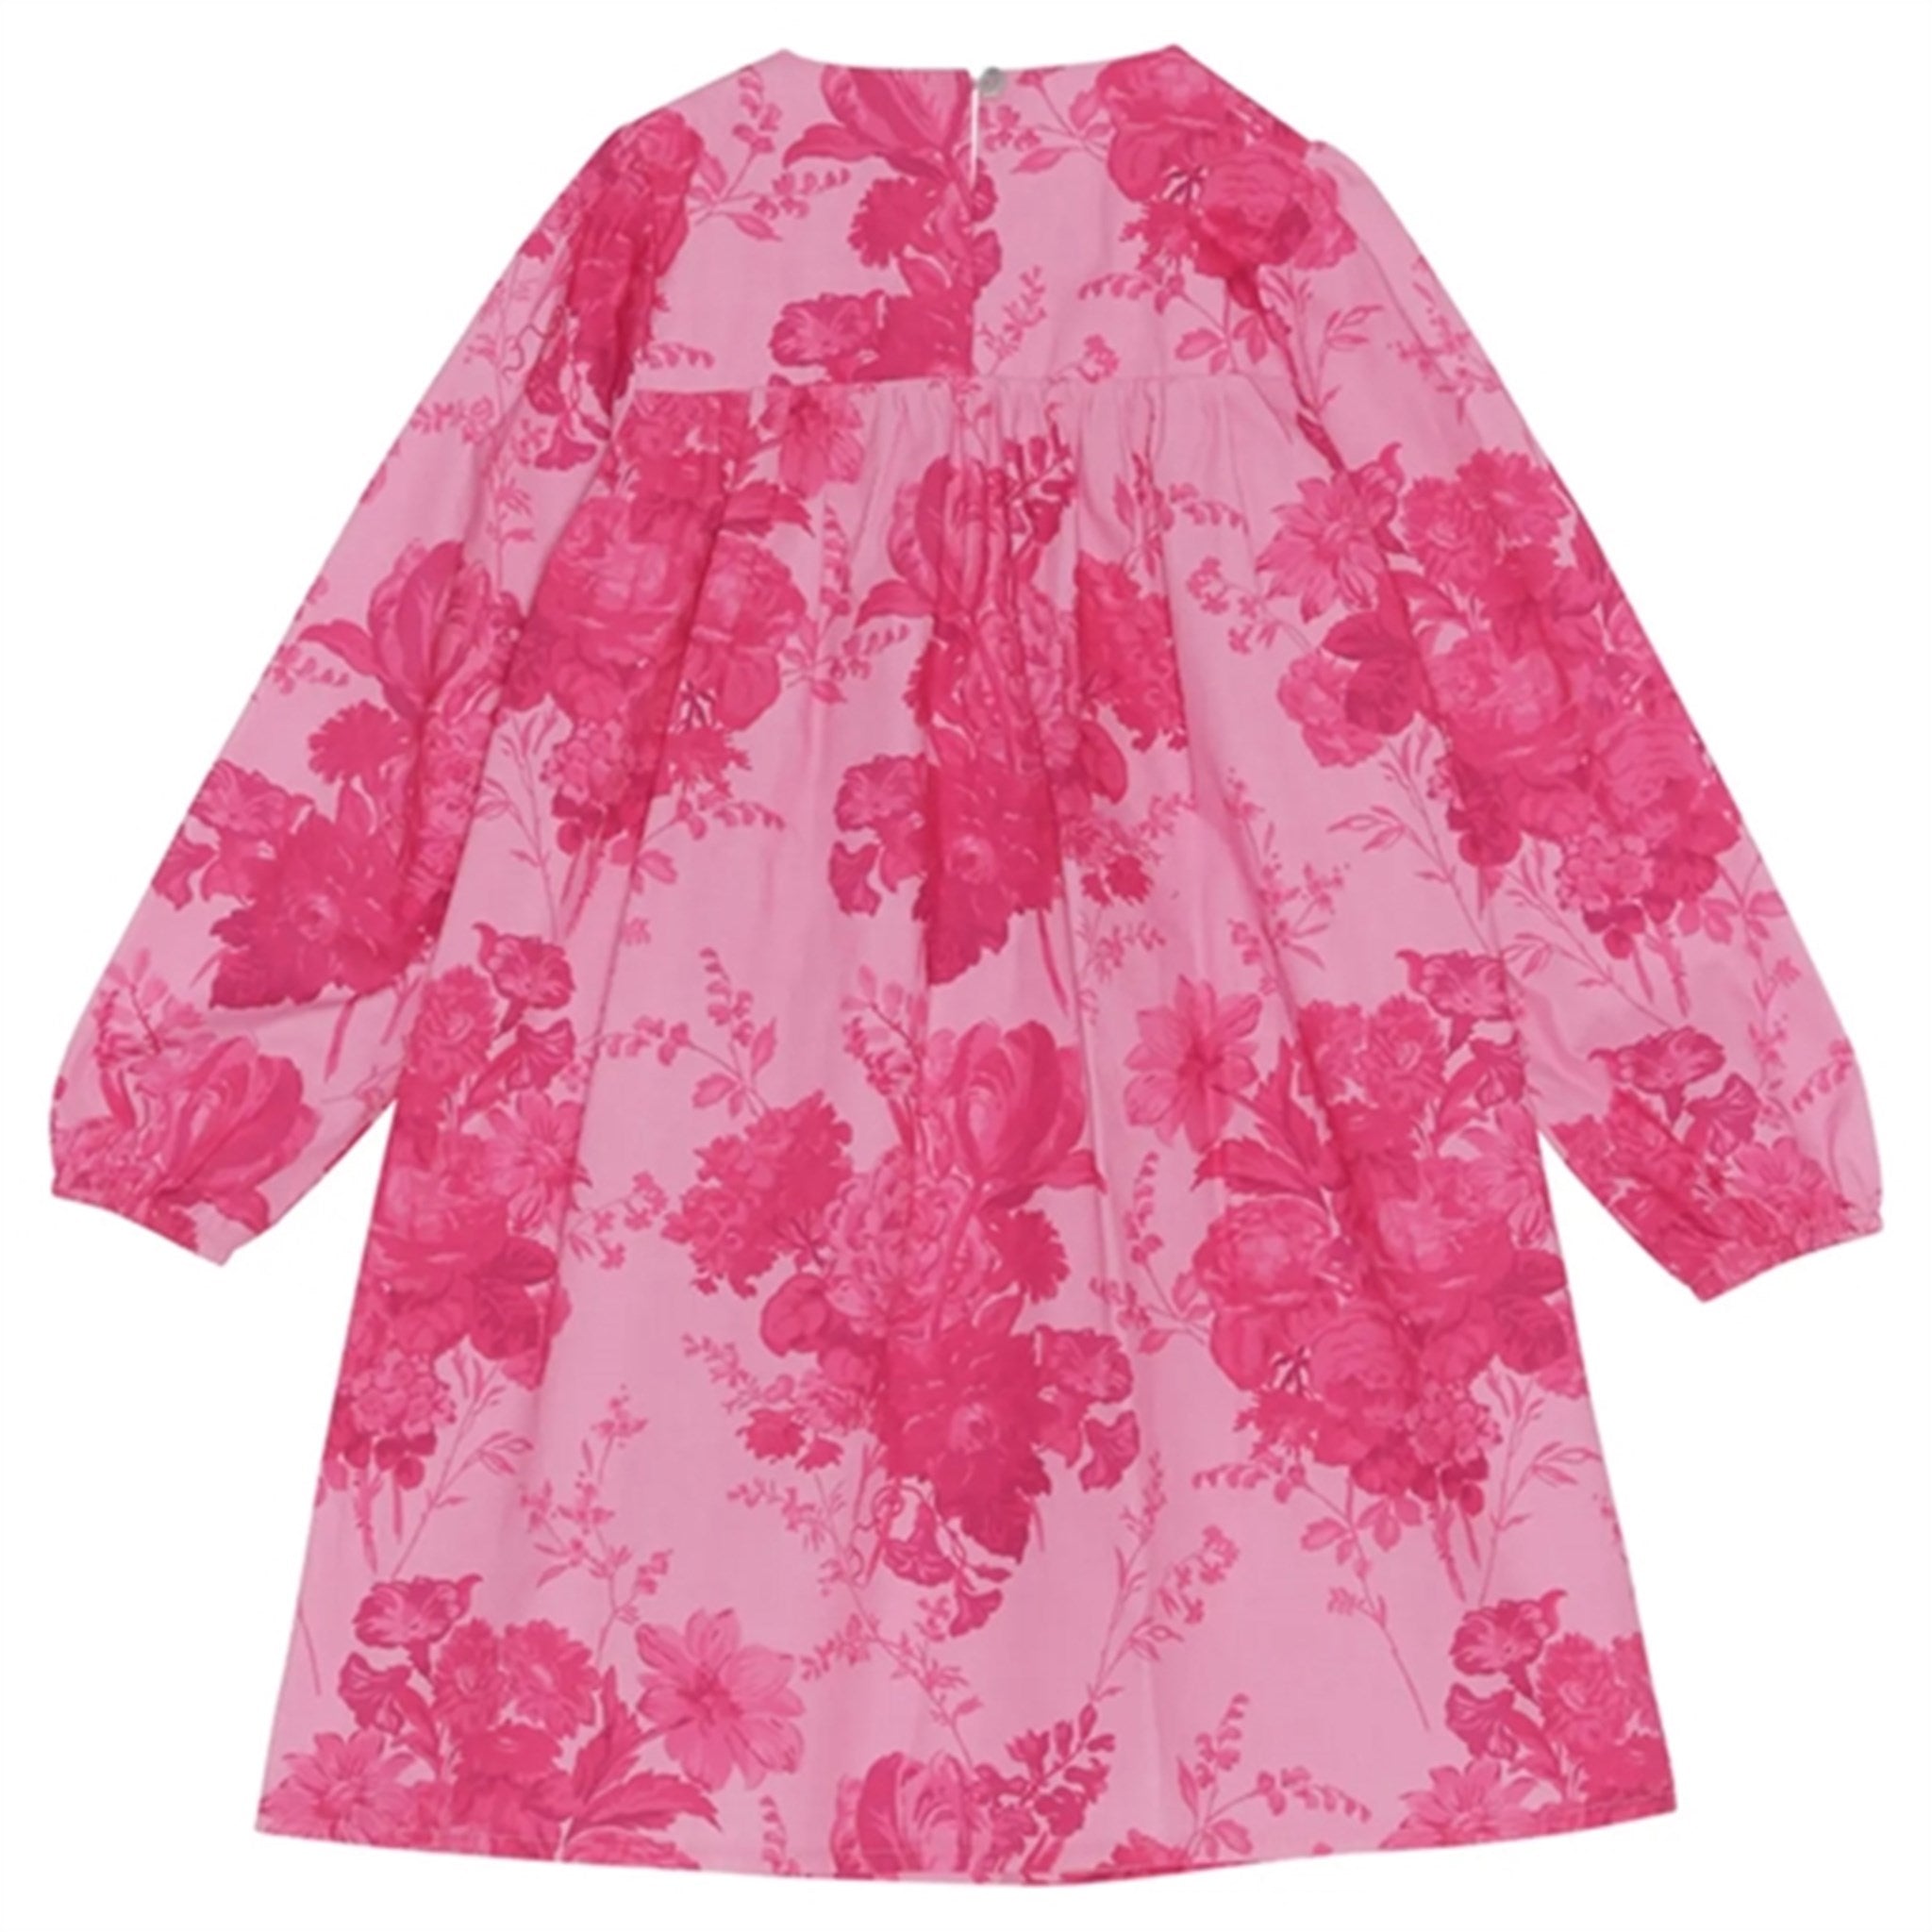 Christina Rohde 129 Dress Pink Floral 2